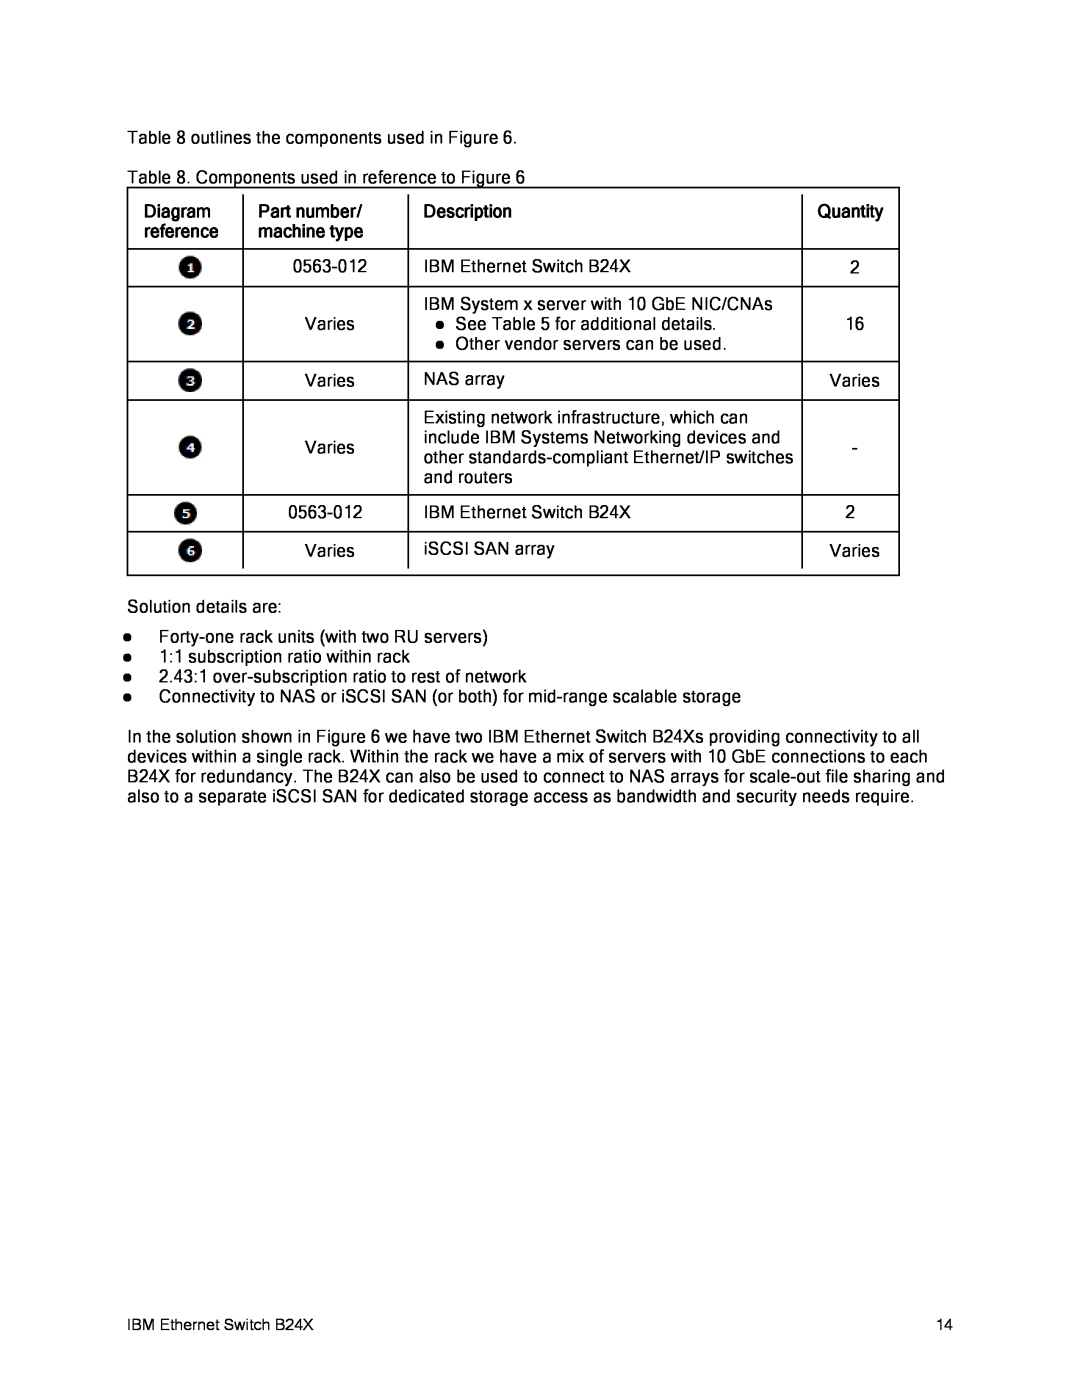 IBM B24X manual Diagram, Quantity, reference, machine type, Part number, Description 